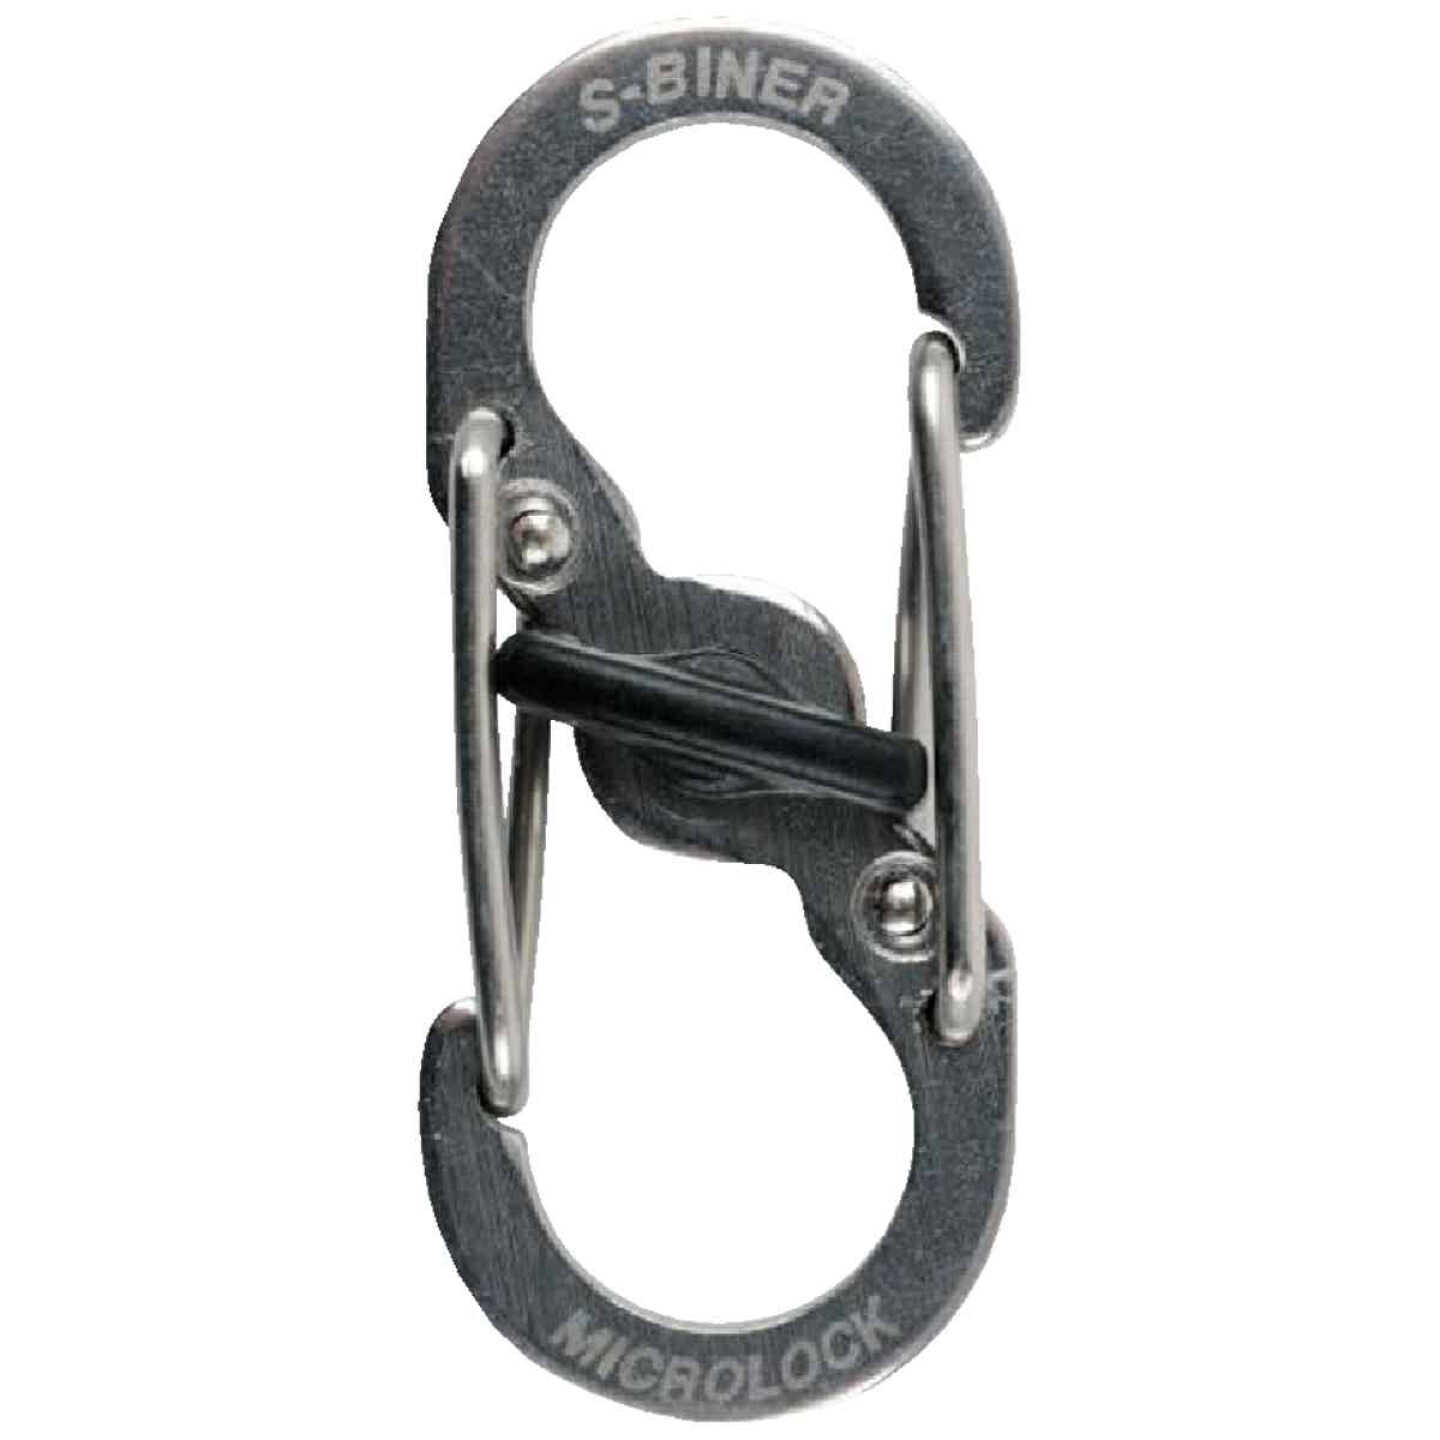 Nite Ize Stainless Steel Slidelock Key Ring